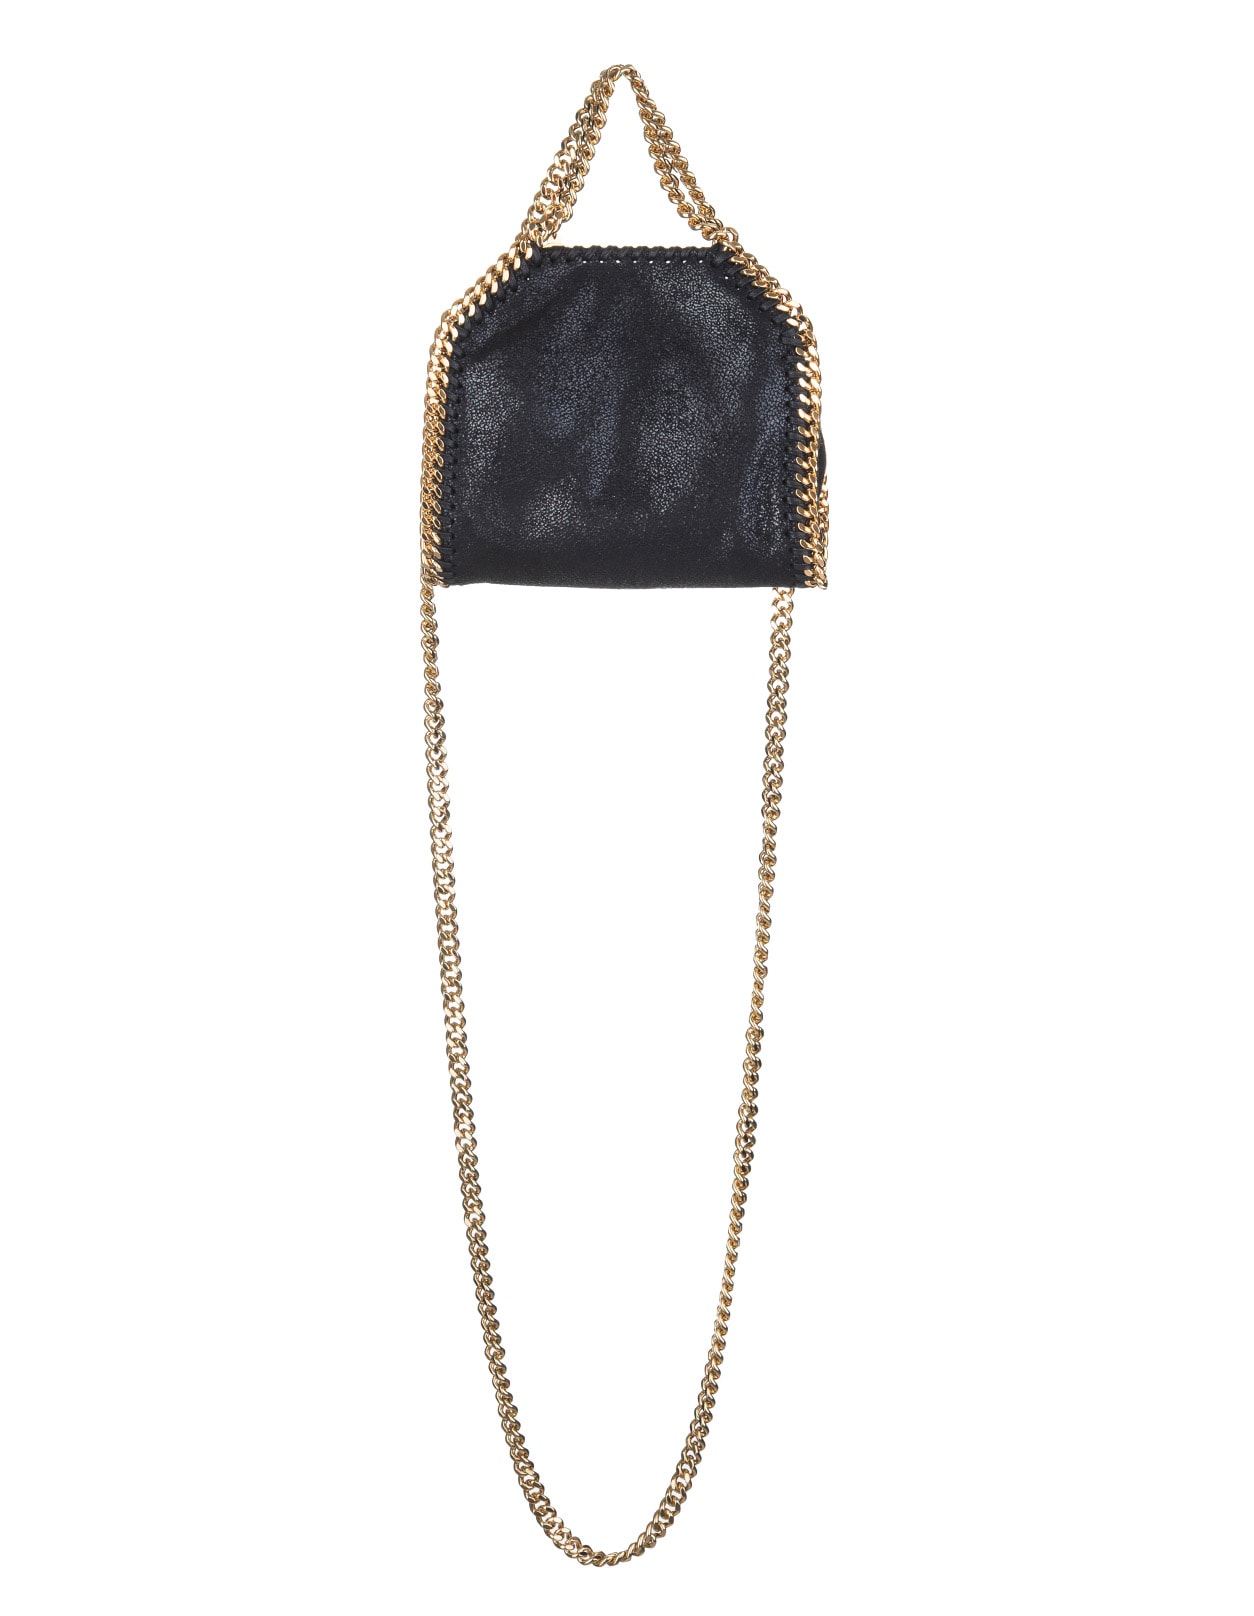 Stella McCartney Black And Golden Tiny Falabella Fold Over Bag